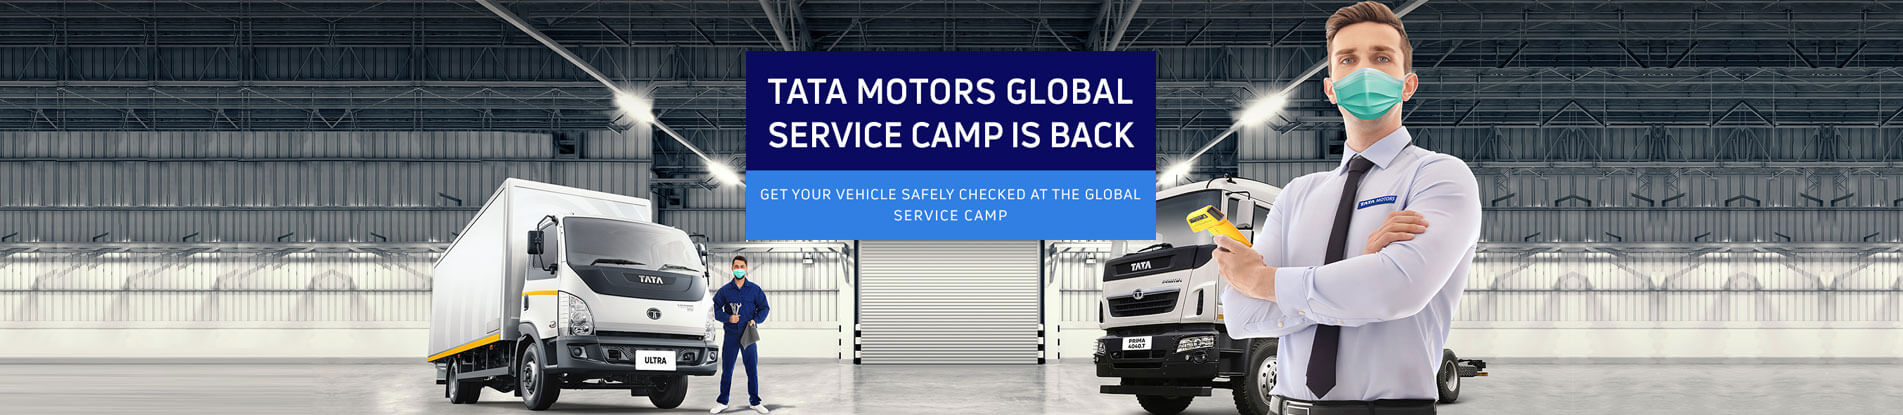 Introducing Tata Intra V20